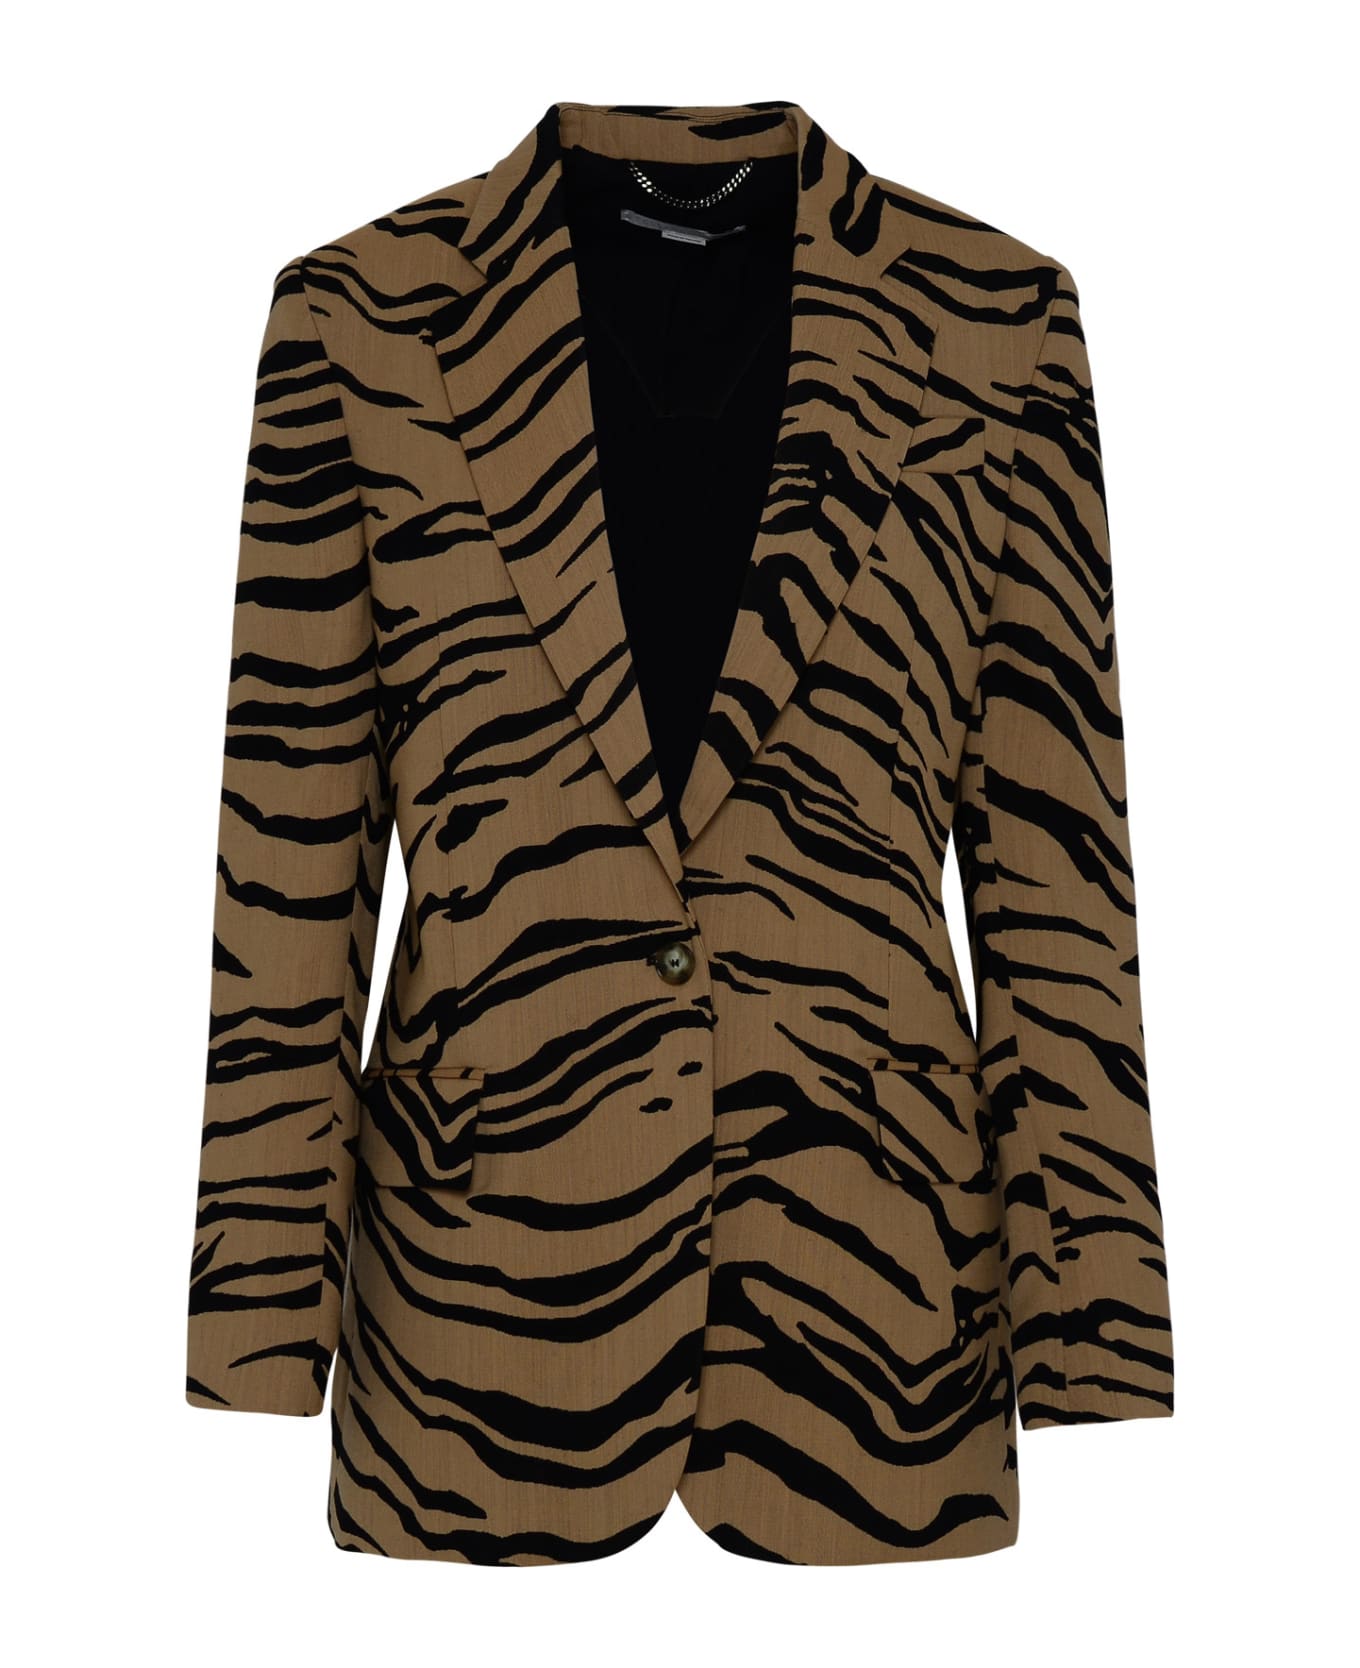 Stella McCartney Tiger Wool Blend Blazer Jacket - BROWN